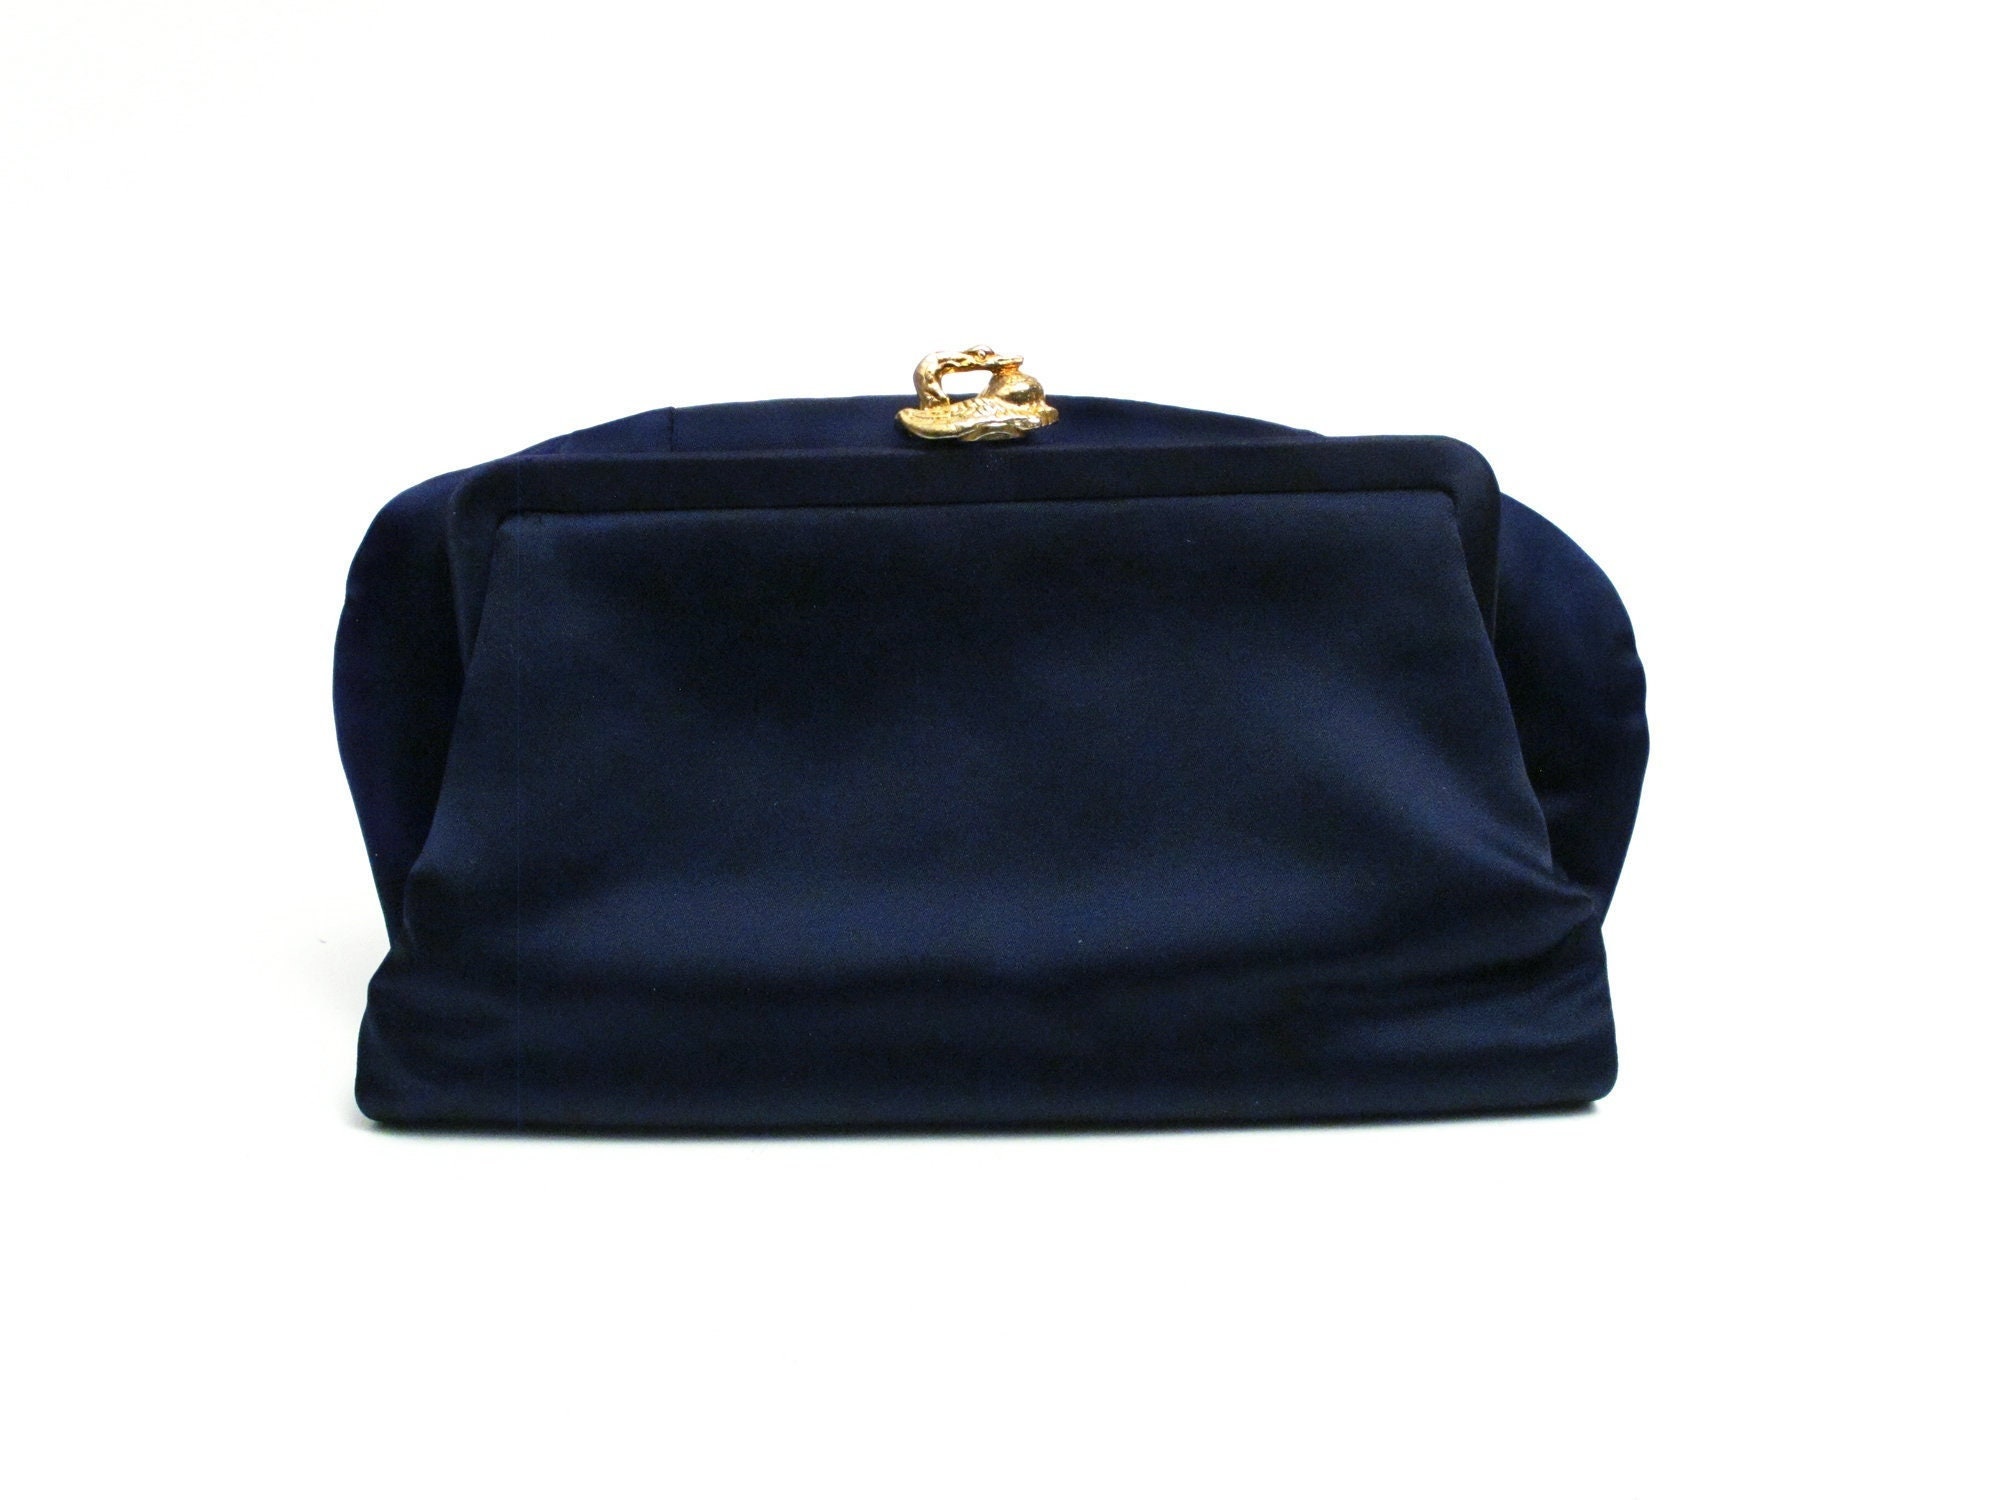 LEWIS, Vintage Handbag, Velvet, Black, Great Condition.